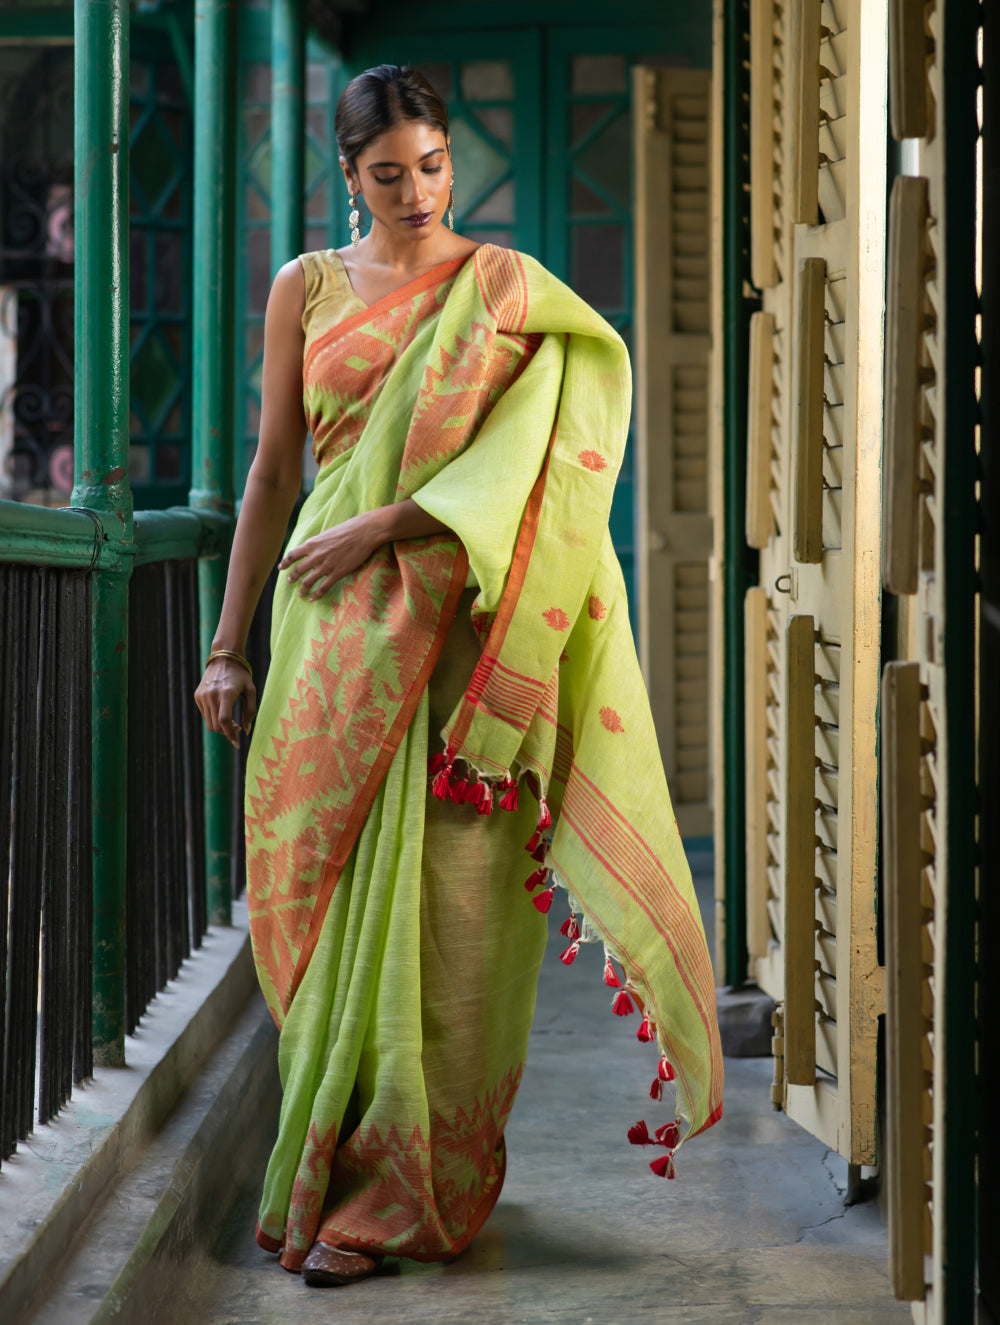 Load image into Gallery viewer, Handwoven Elegance. Exclusive Linen Jamdani Saree  - Lime